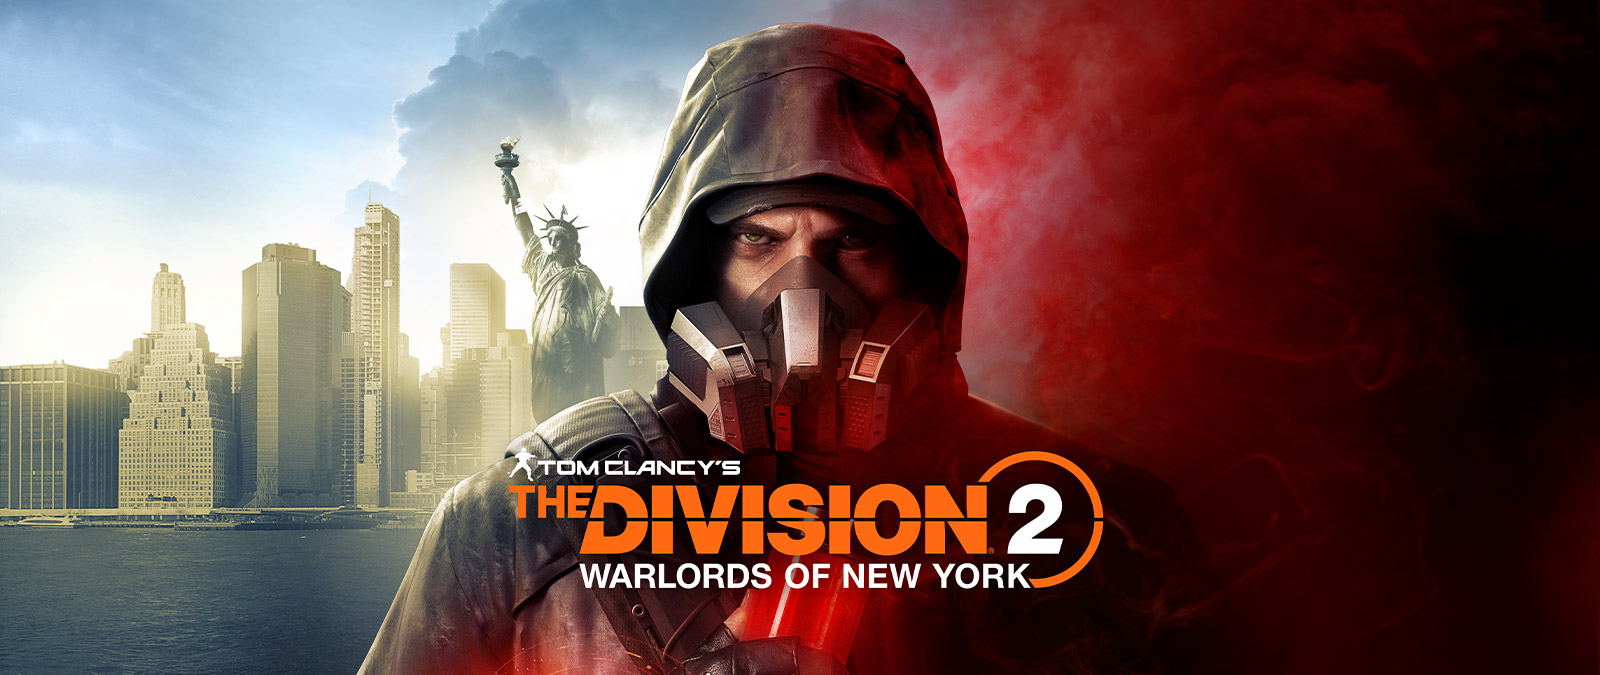 Tom Clancy’s The Division 2 Warlords of New York, Aaron Keener portant un masque à gaz se tient devant la Statue de la Liberté